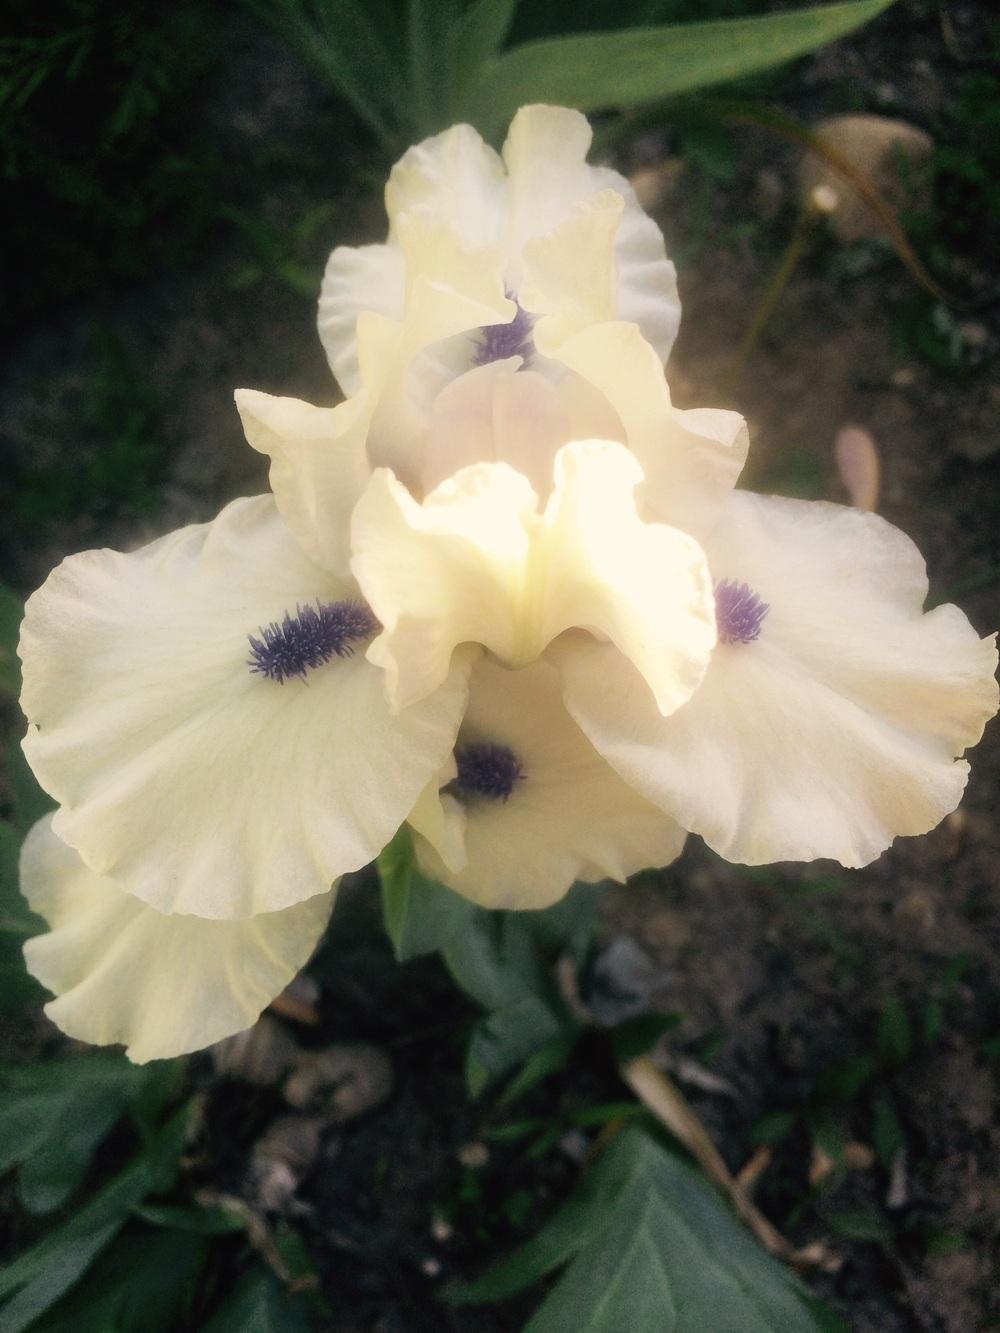 Photo of Standard Dwarf Bearded Iris (Iris 'Bluebeard's Ghost') uploaded by Lbsmitty